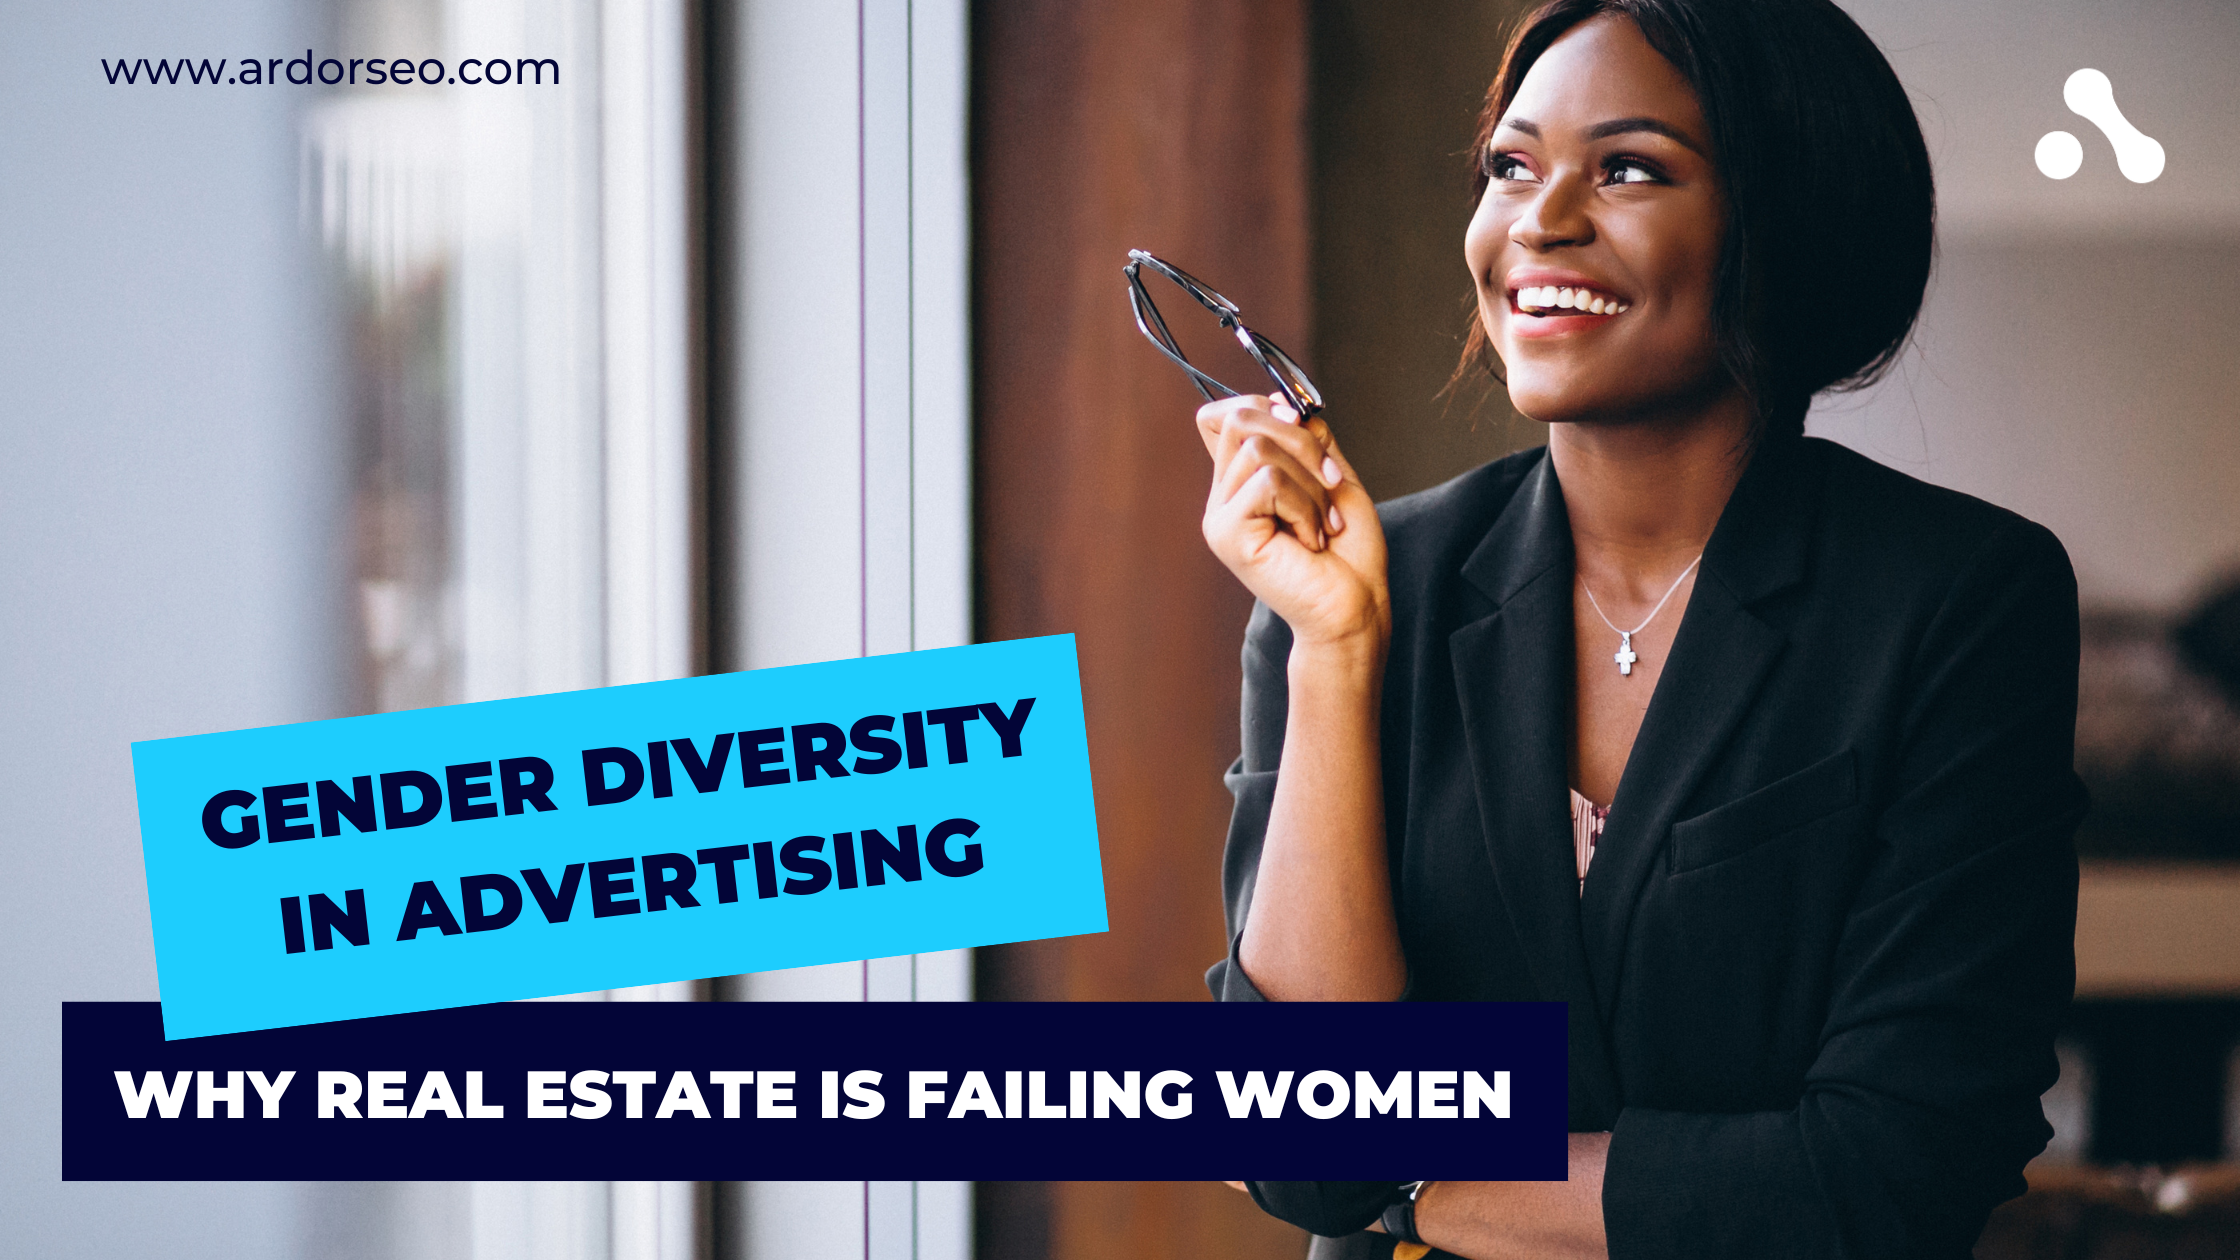 Gender diversity in advertising